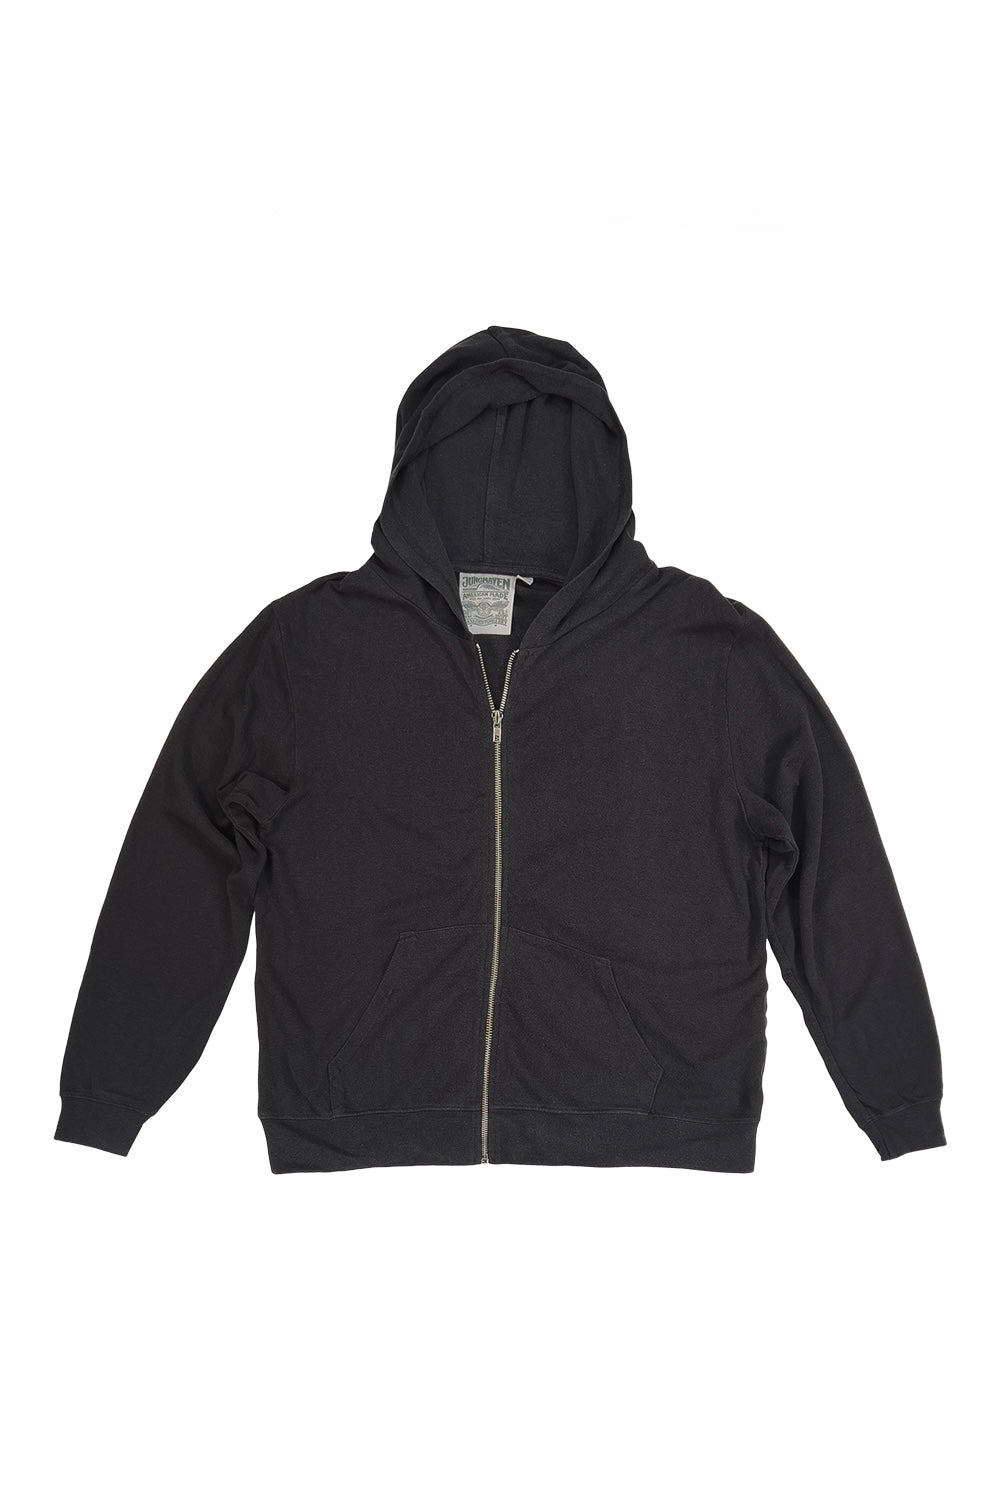 Newport Sweatshirt | Jungmaven Hemp Clothing & Accessories / Color: Black